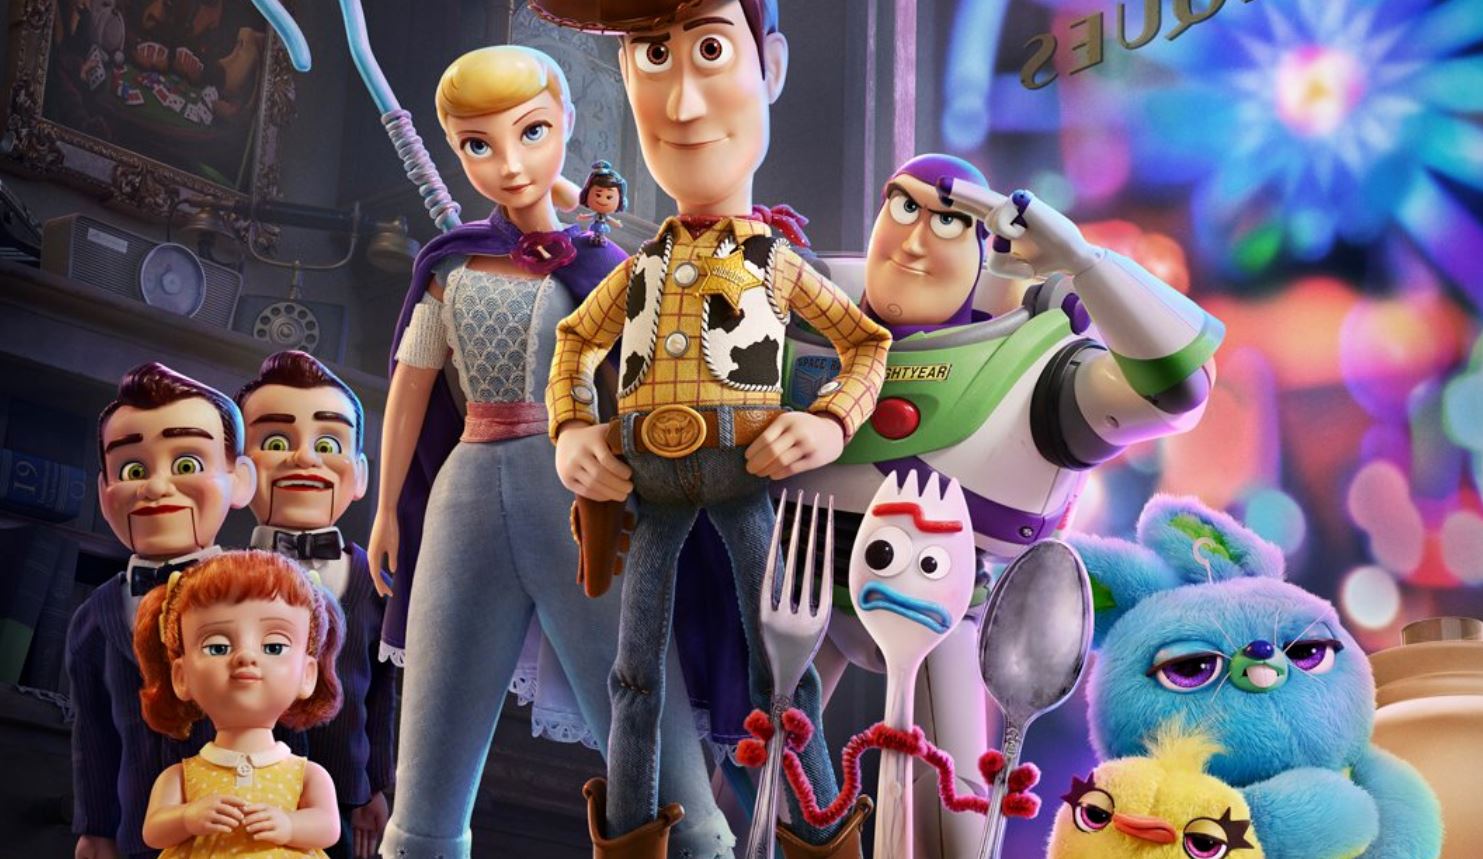 Dapat Perfect Score 100% Di Rotten Tomatoes, Filem Toy Story 4 Serius Berbaloi